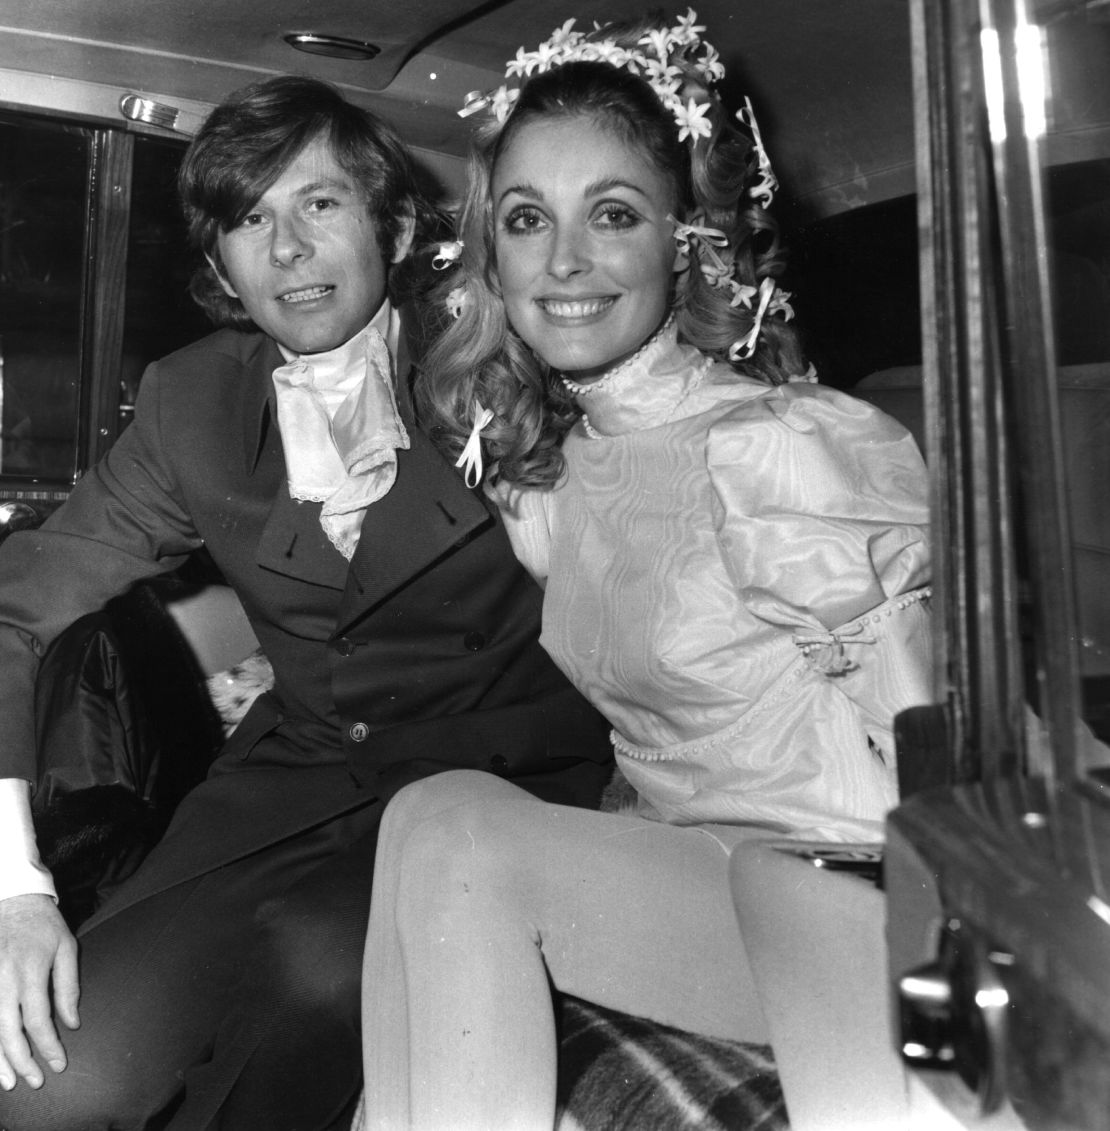 Polish film director Roman Polanski and the late American actress Sharon Tate at their wedding.